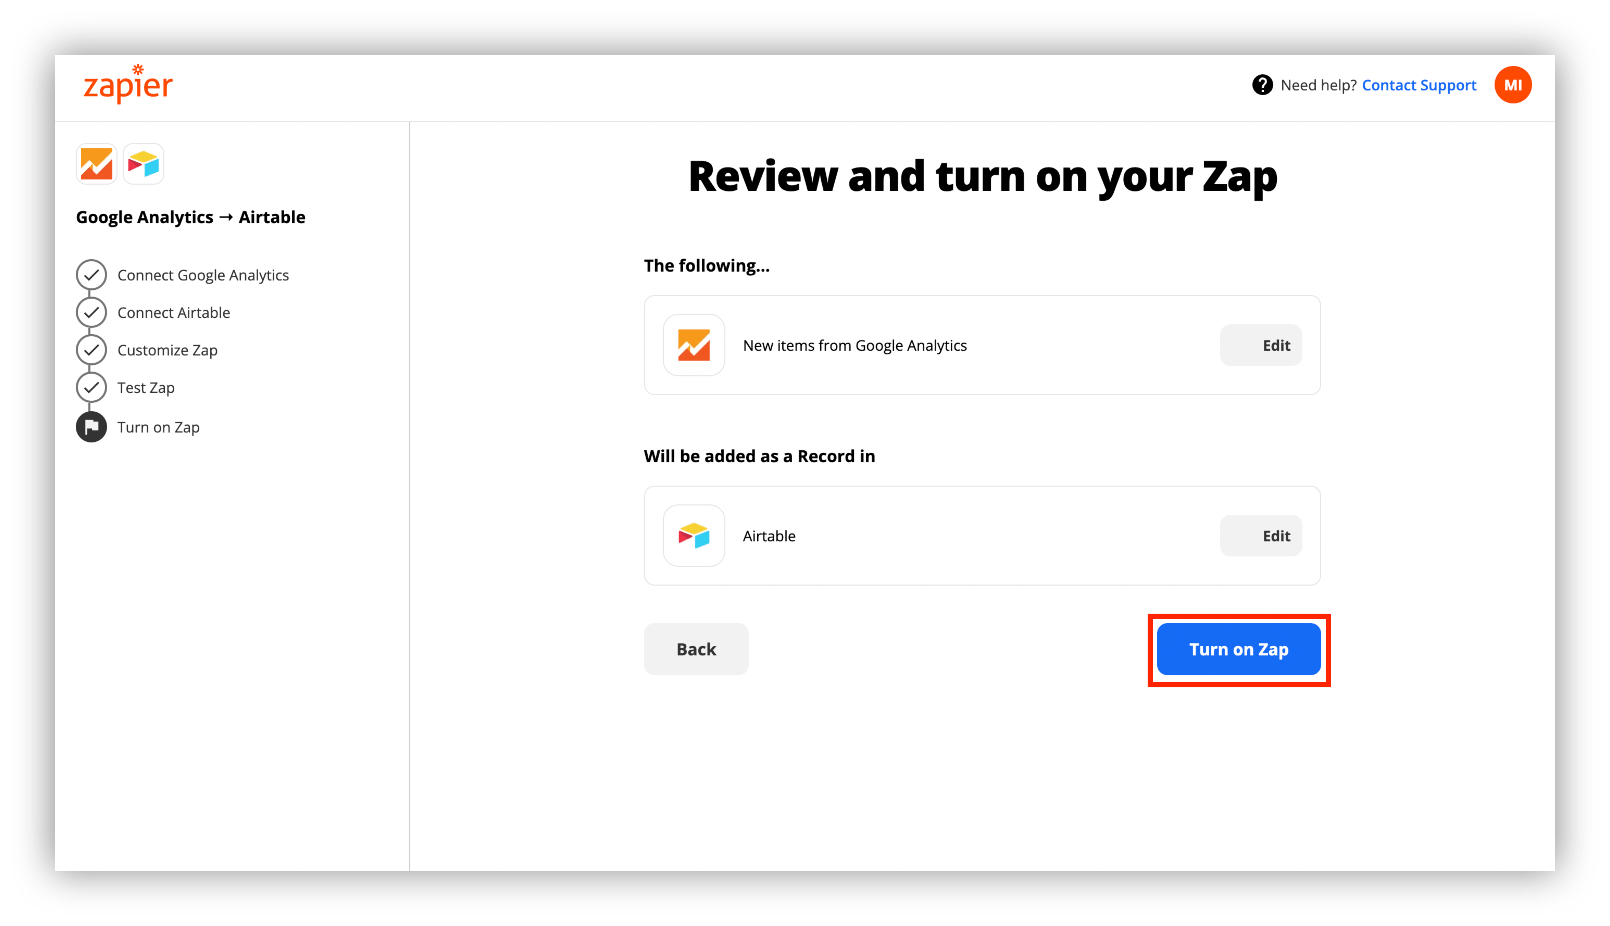 Turn on Zap